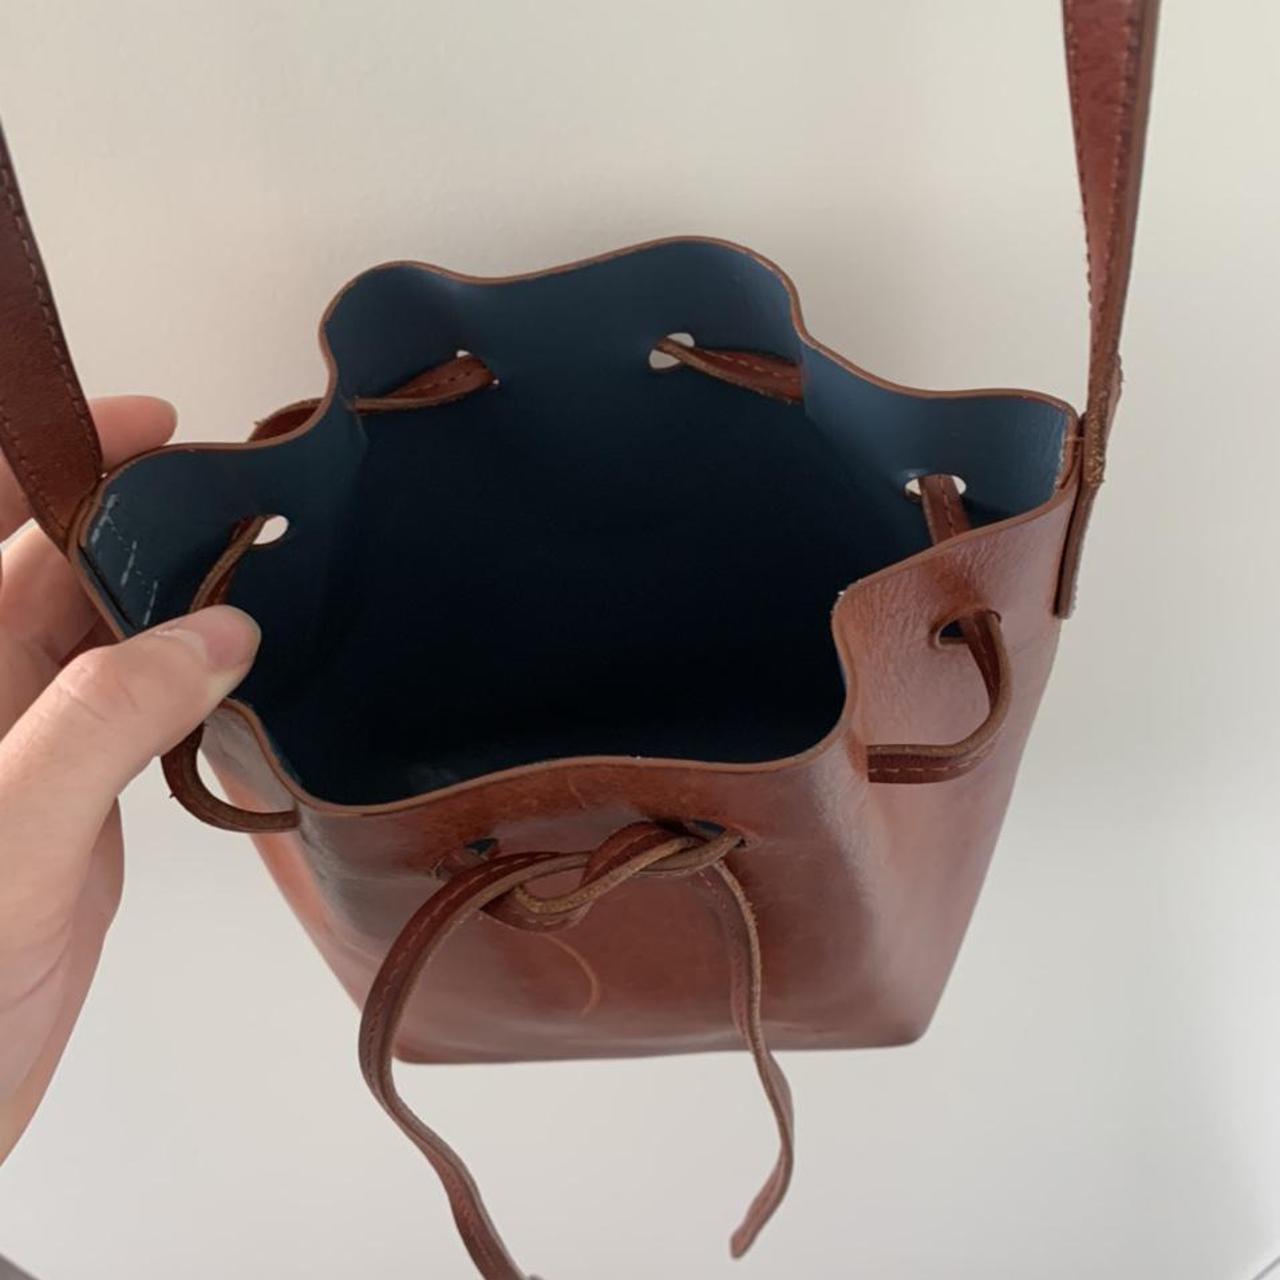 Product Image 2 - Mini Mini Mansur Bucket Bag
Brown